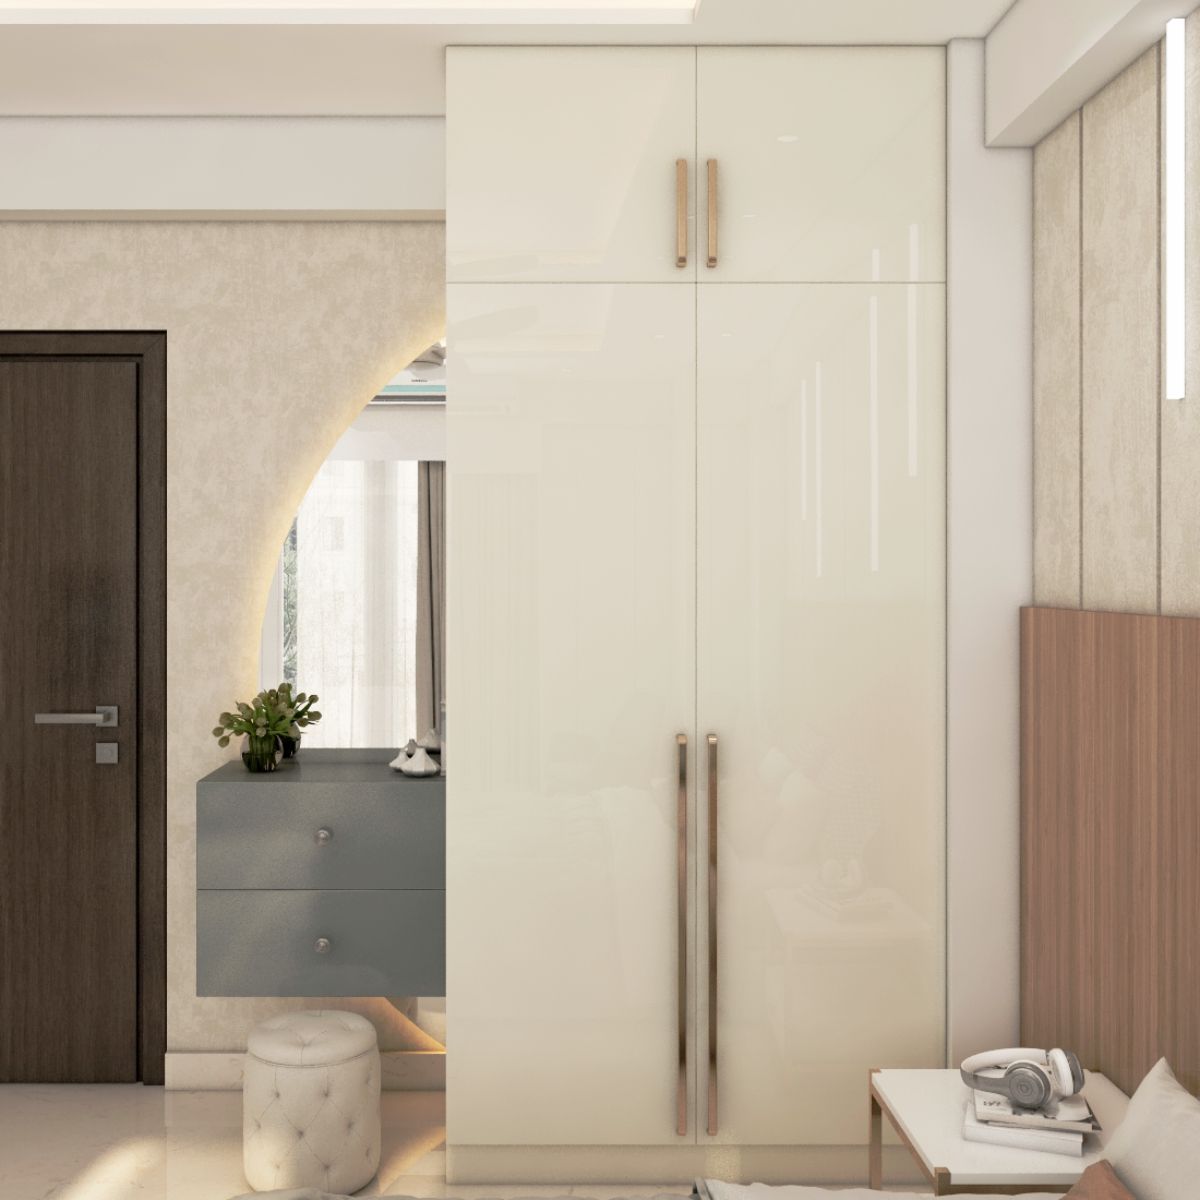 Contemporary White 2-Door Wardrobe Design With A Mirror